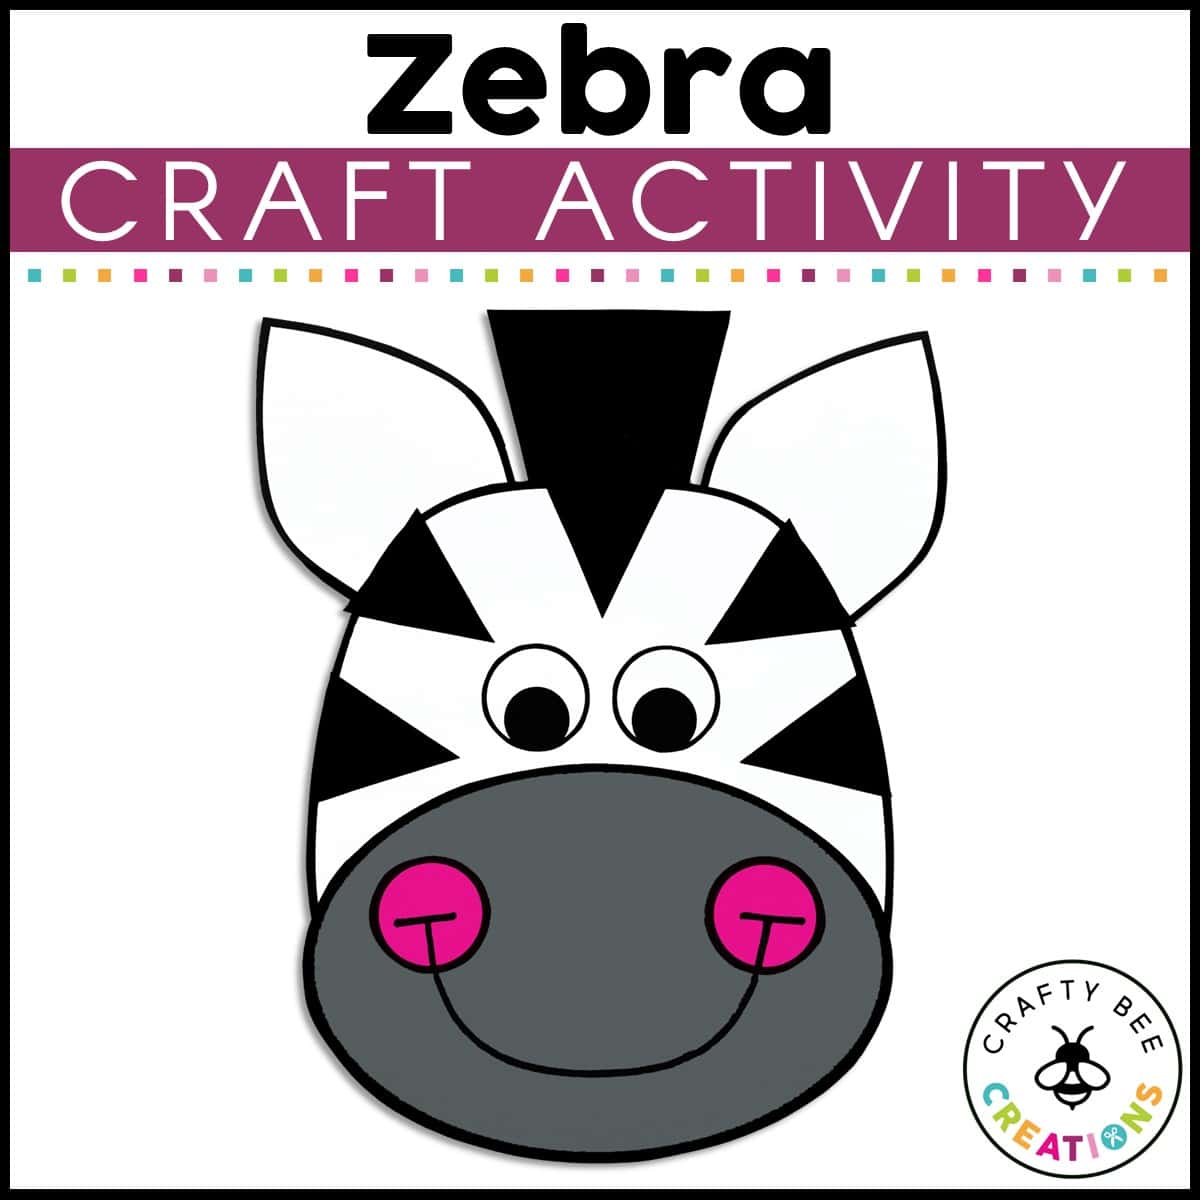 Zebra Craft Activity Crafty Bee Creations